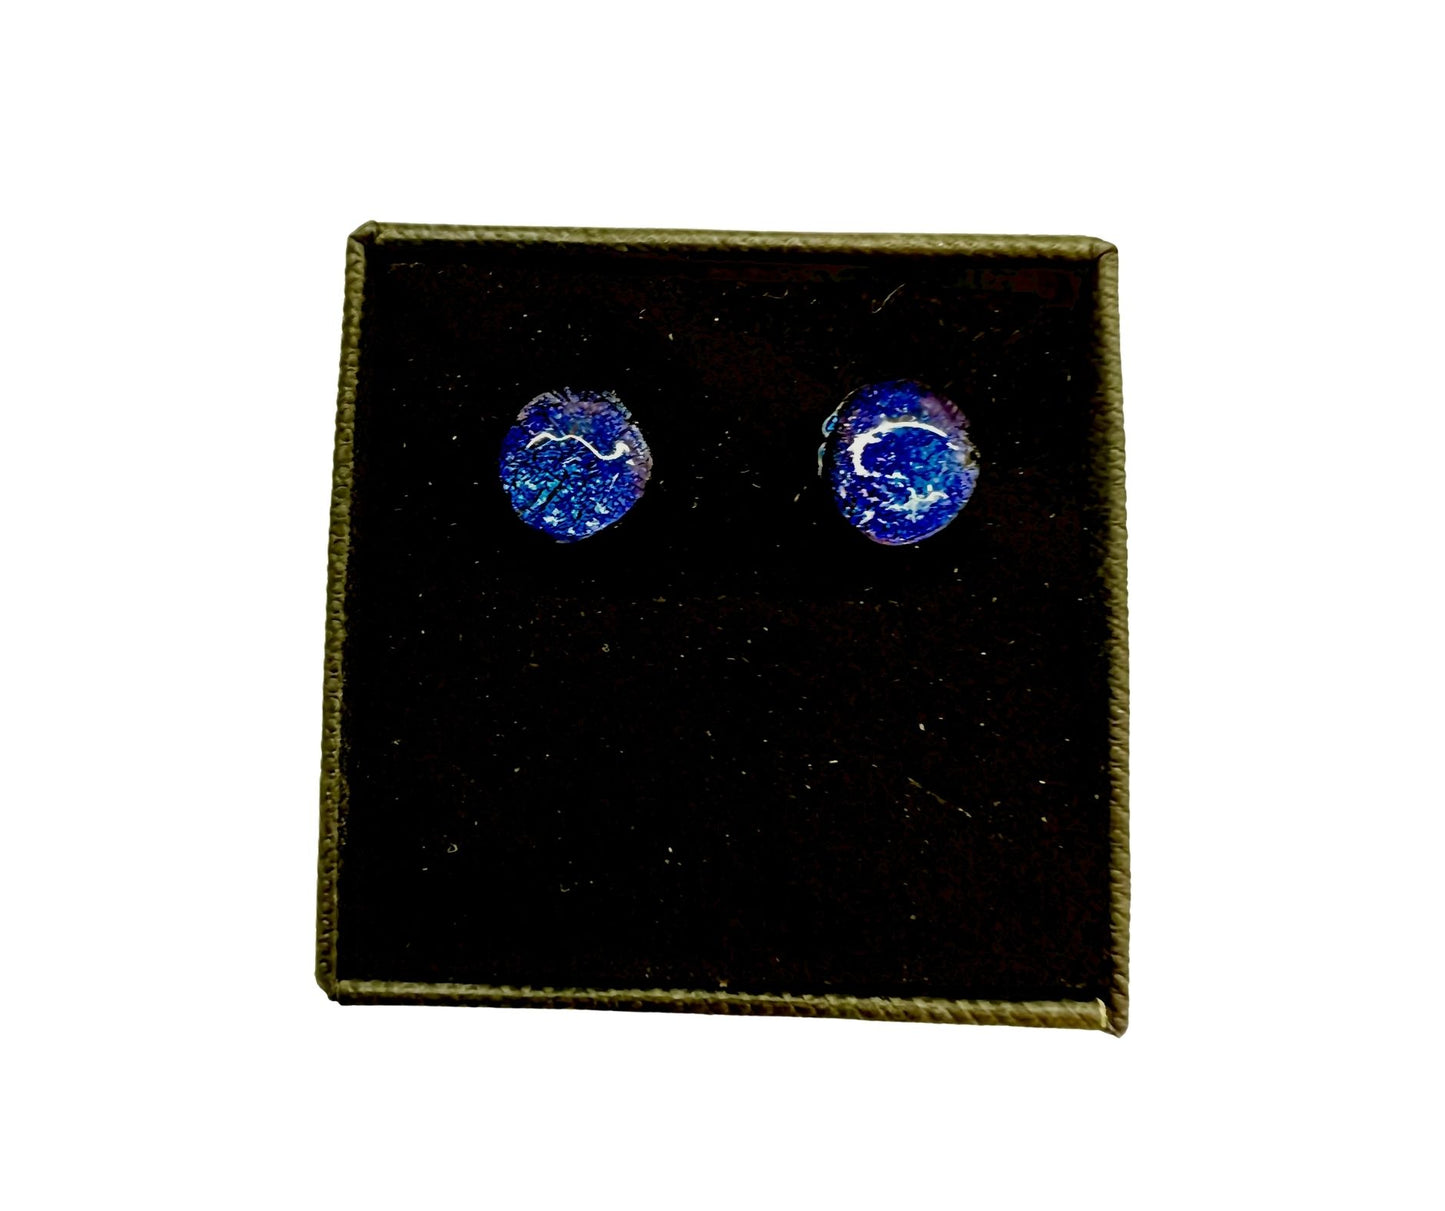 blue murano glass earrings